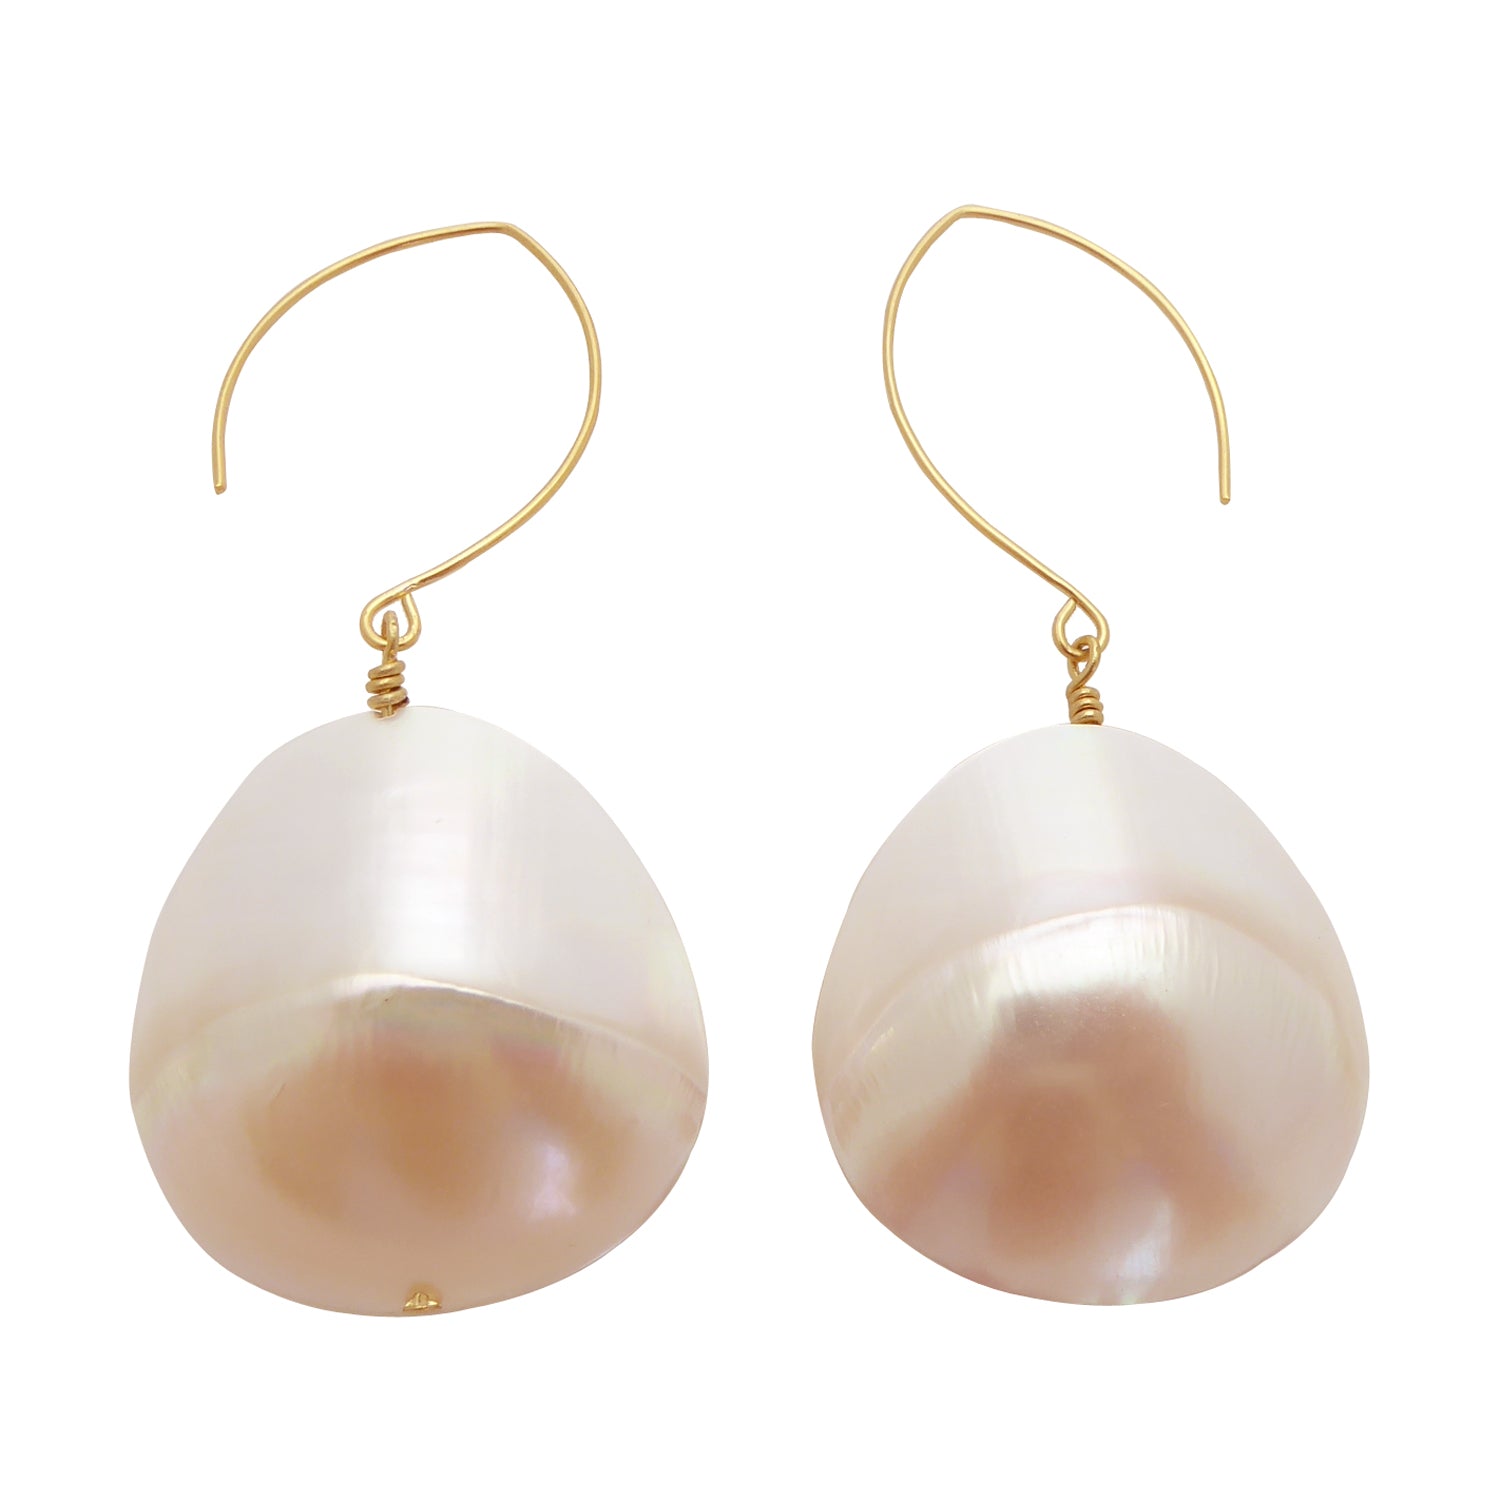 Chiaro di luna shell earrings by Jenny Dayco 1